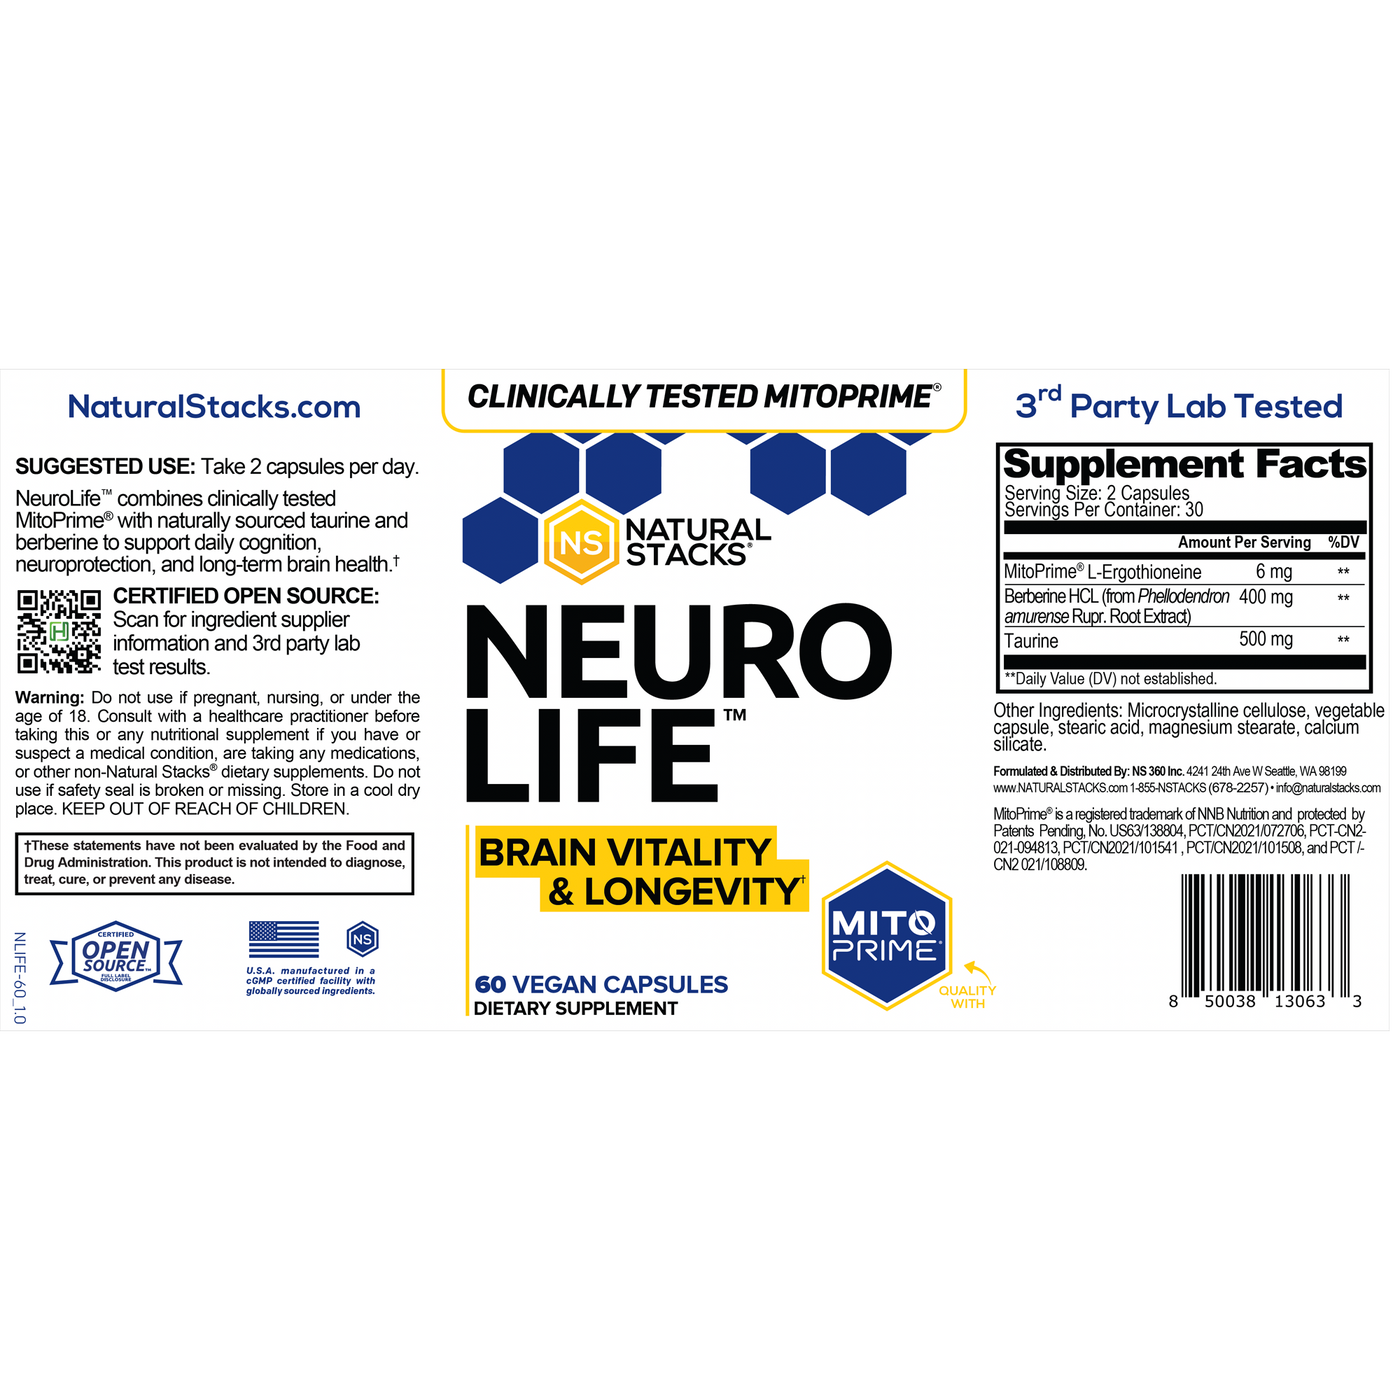 Neuro Life 60c Curated Wellness